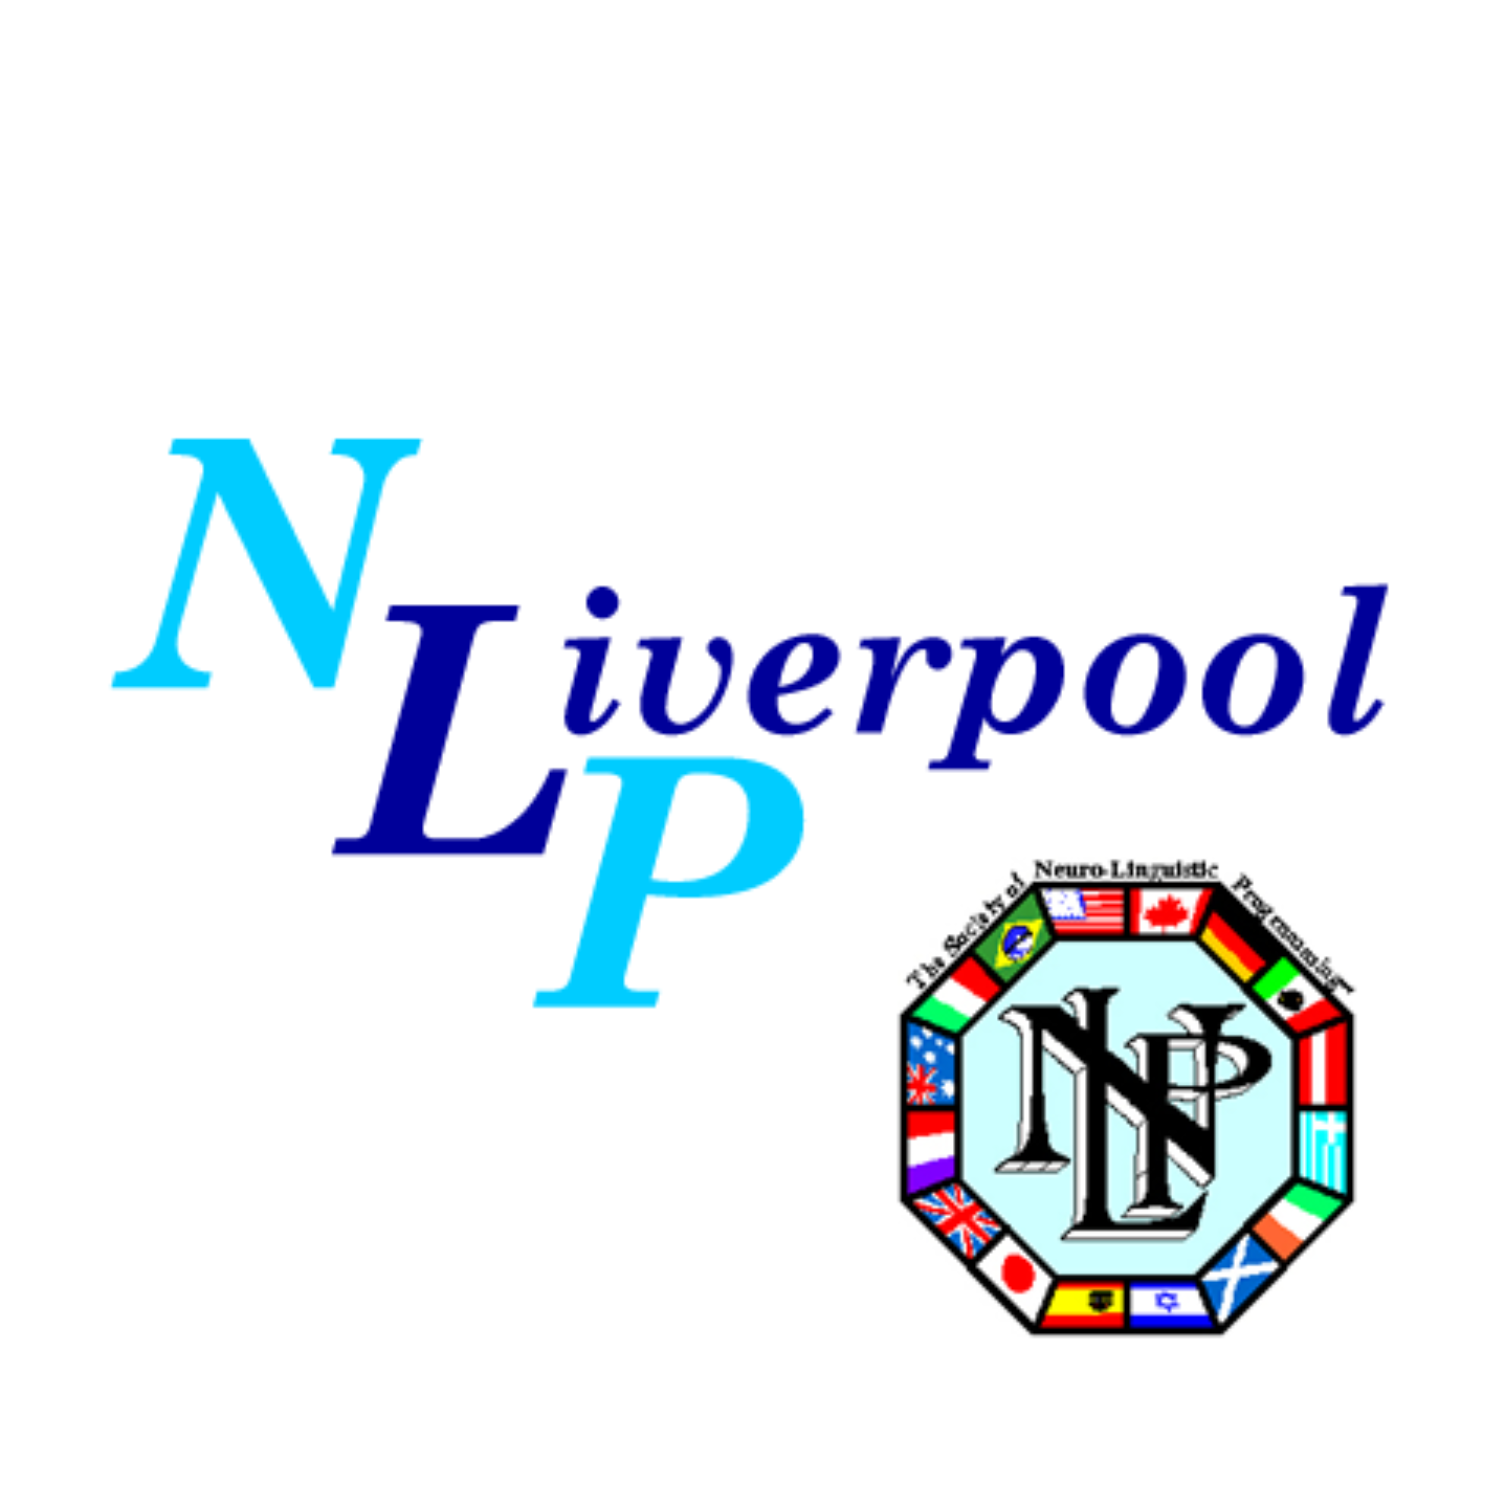 NLP Liverpool logo